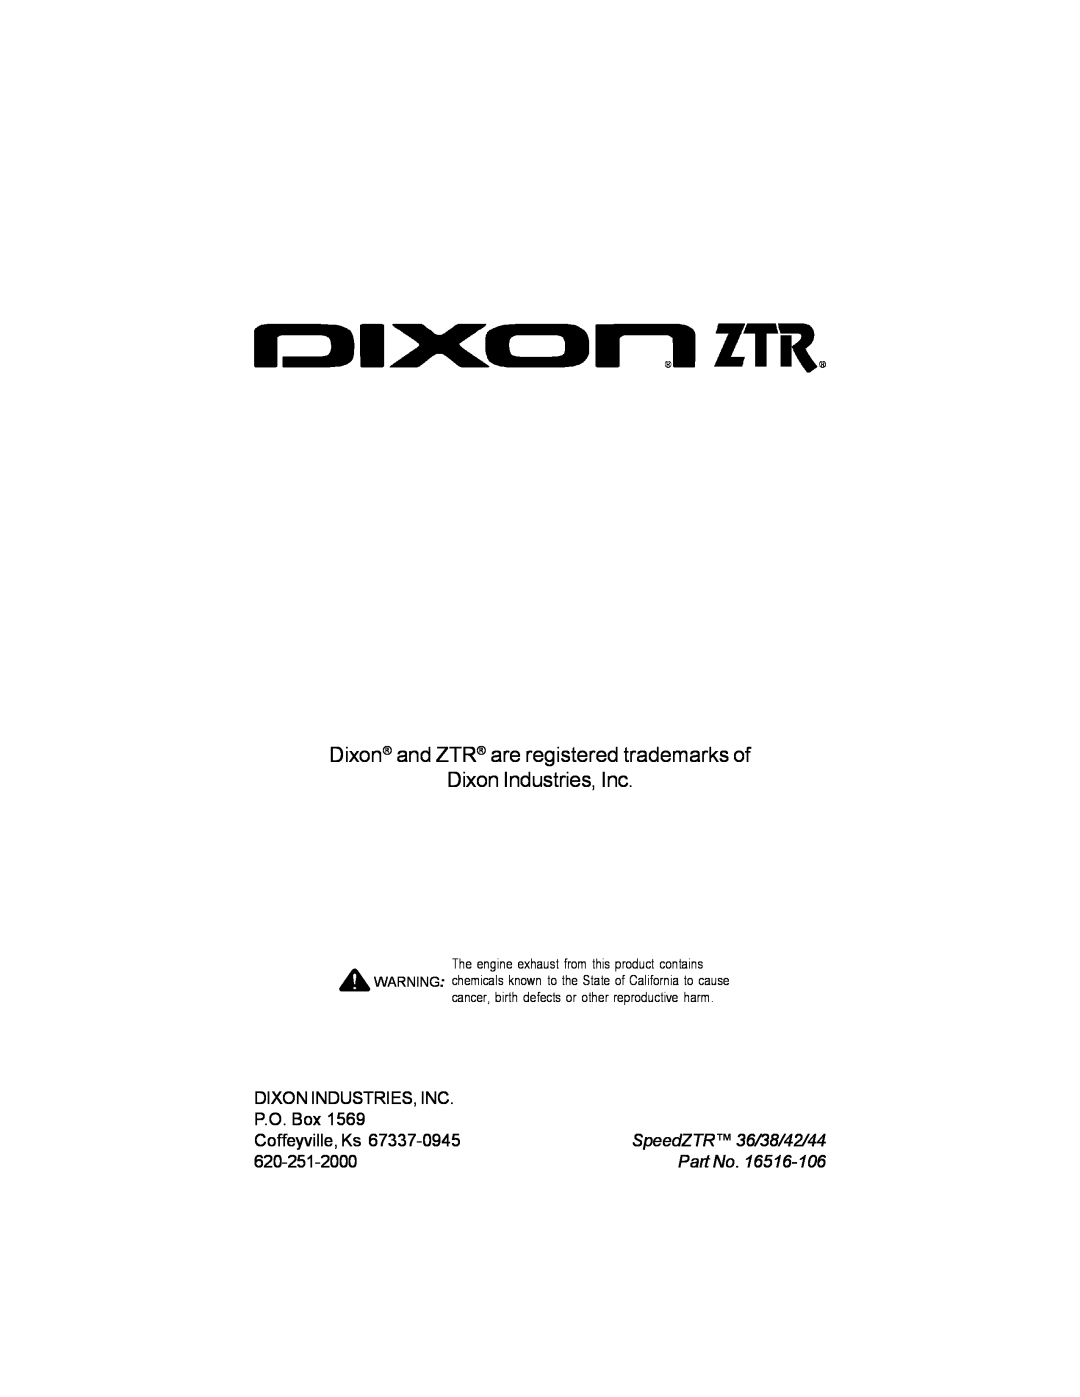 Dixon Dixon and ZTR are registered trademarks of Dixon Industries, Inc, P.O. Box, Coffeyville, Ks, SpeedZTR 36/38/42/44 